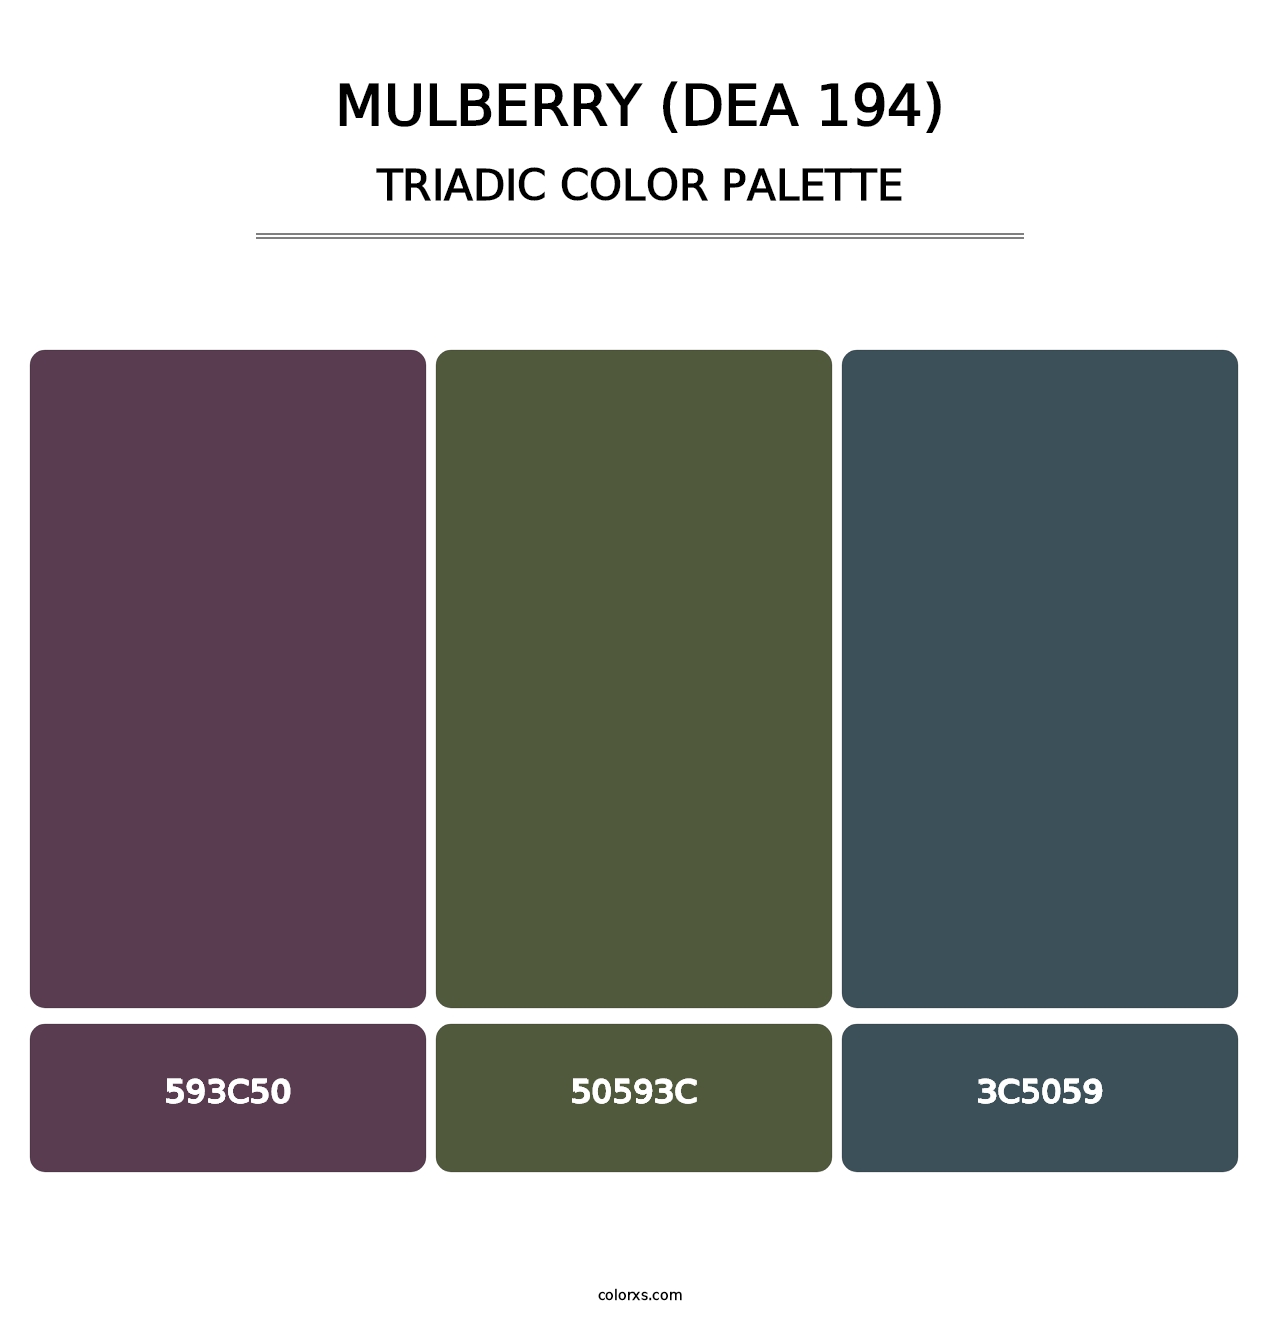 Mulberry (DEA 194) - Triadic Color Palette